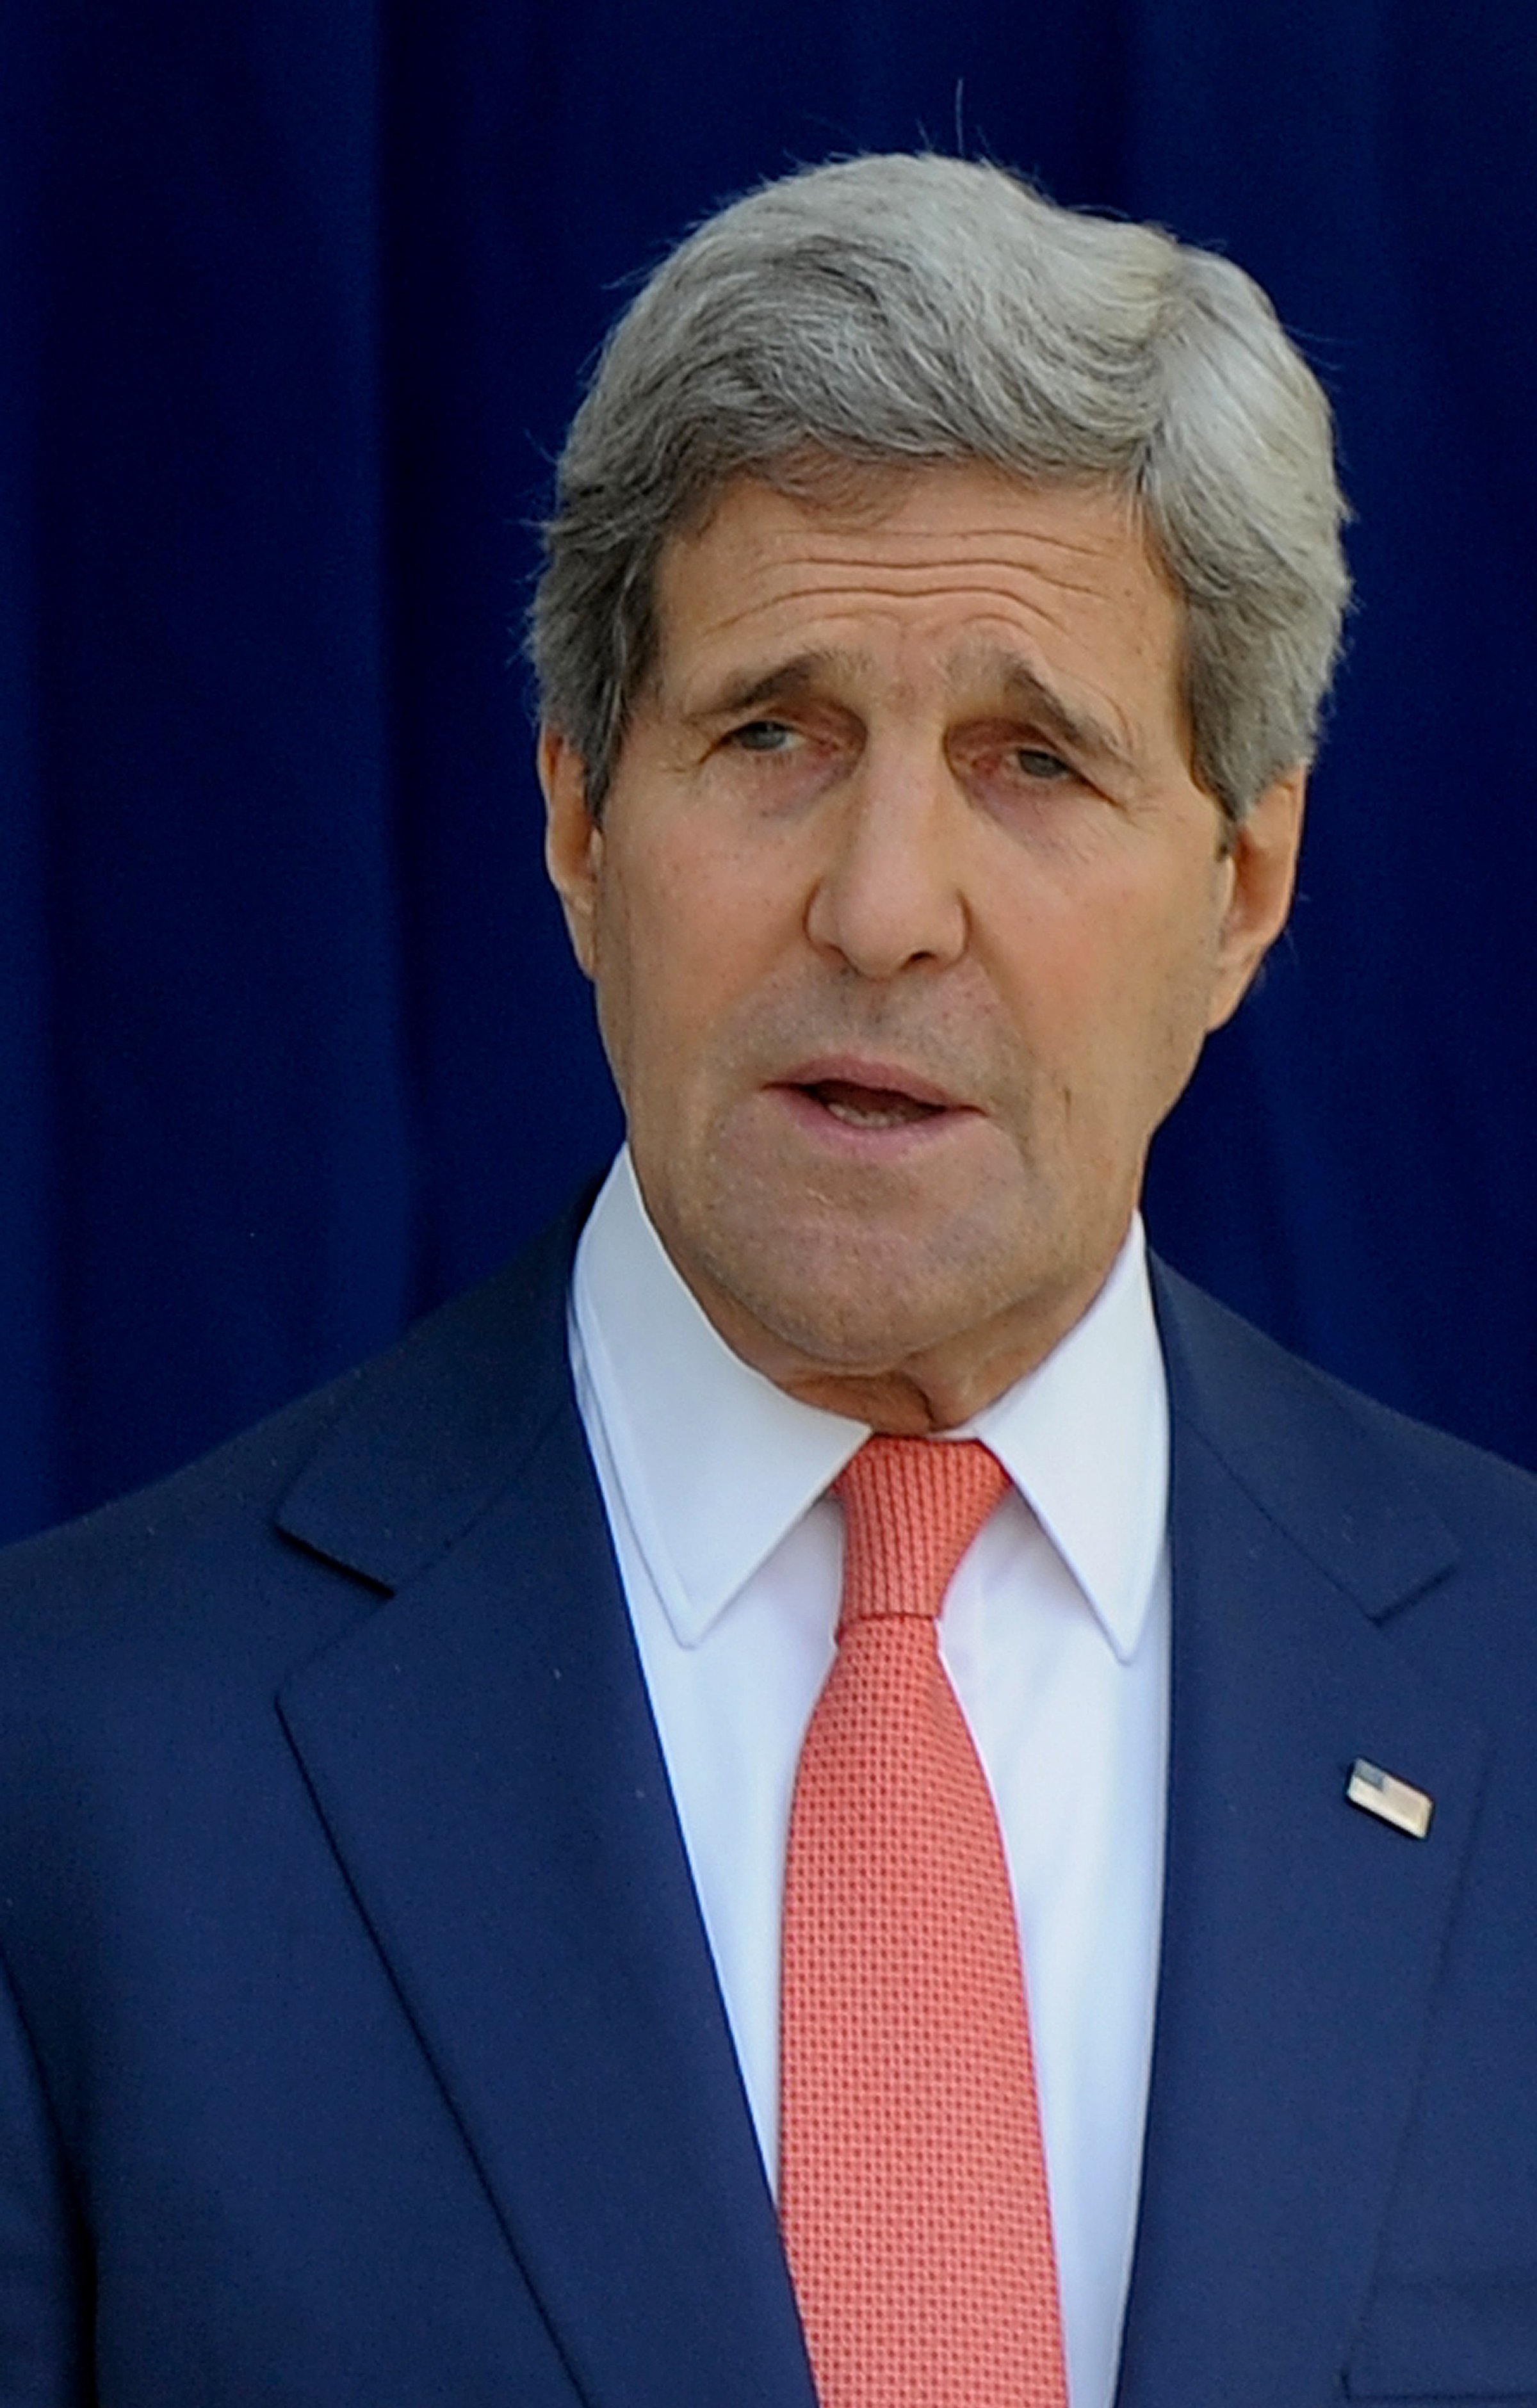 US Secretary of State Kerry in Nigeria